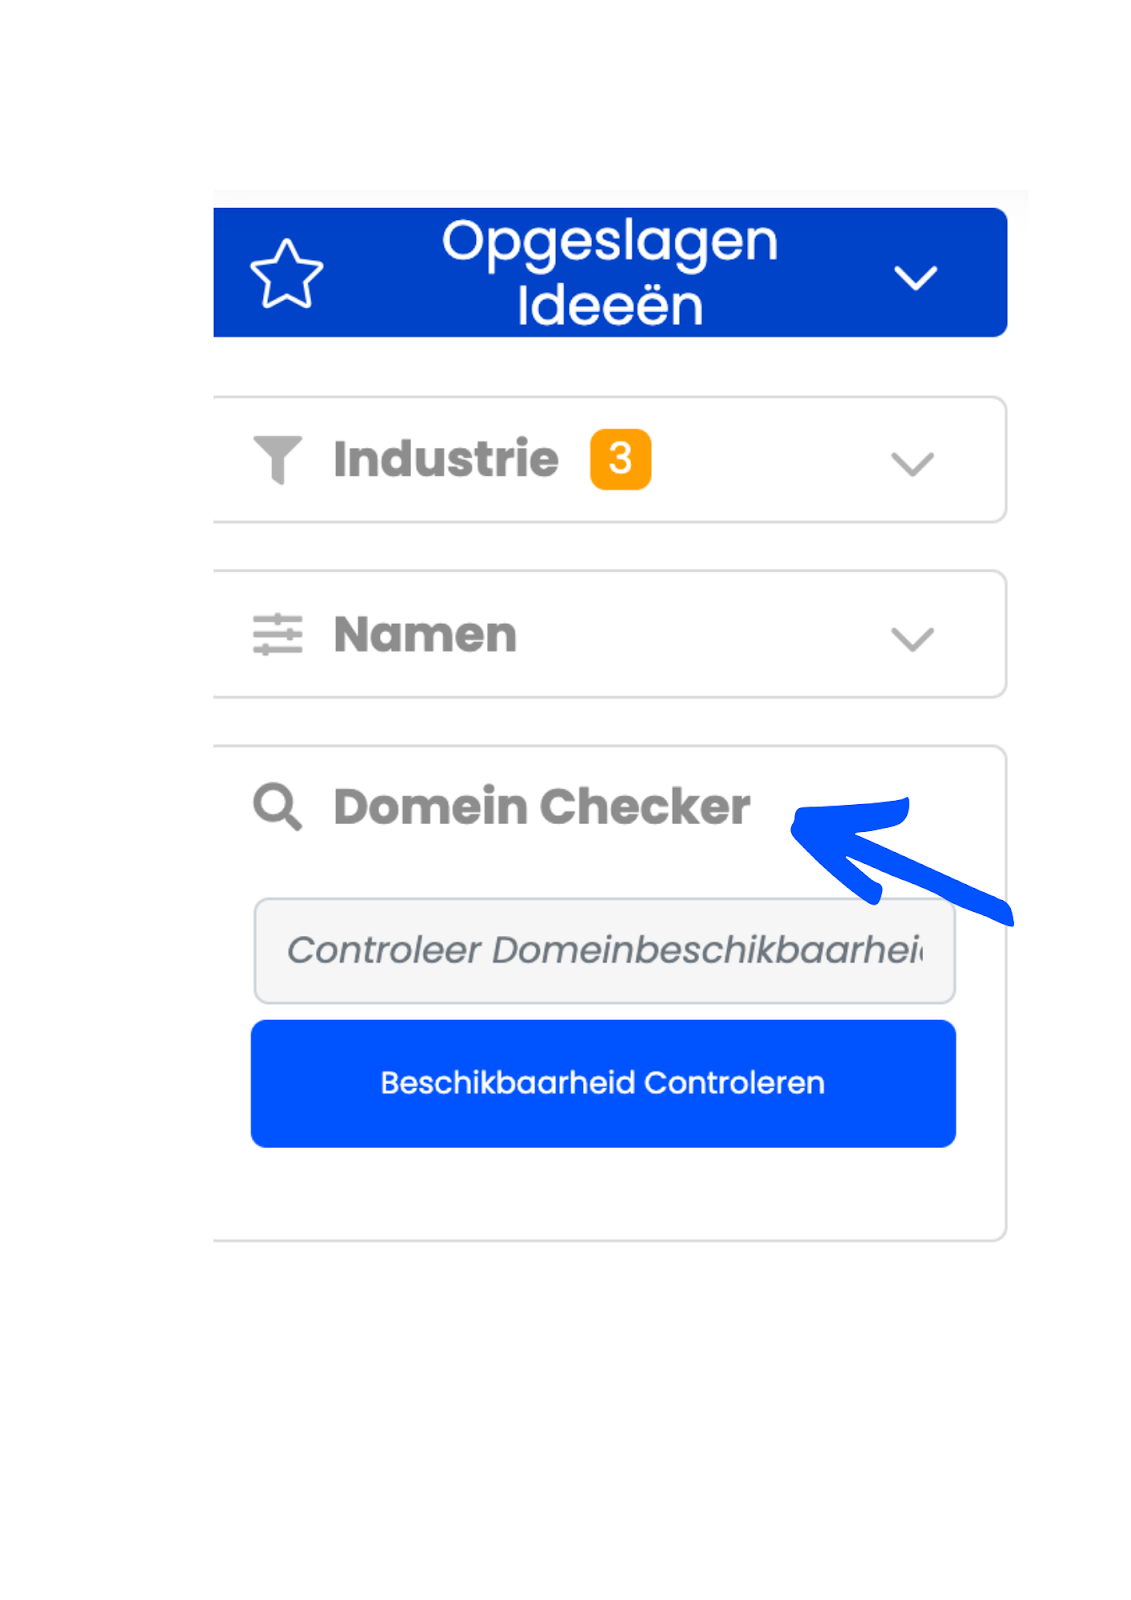 Arrow highlighting the domain checker option on the dashboard